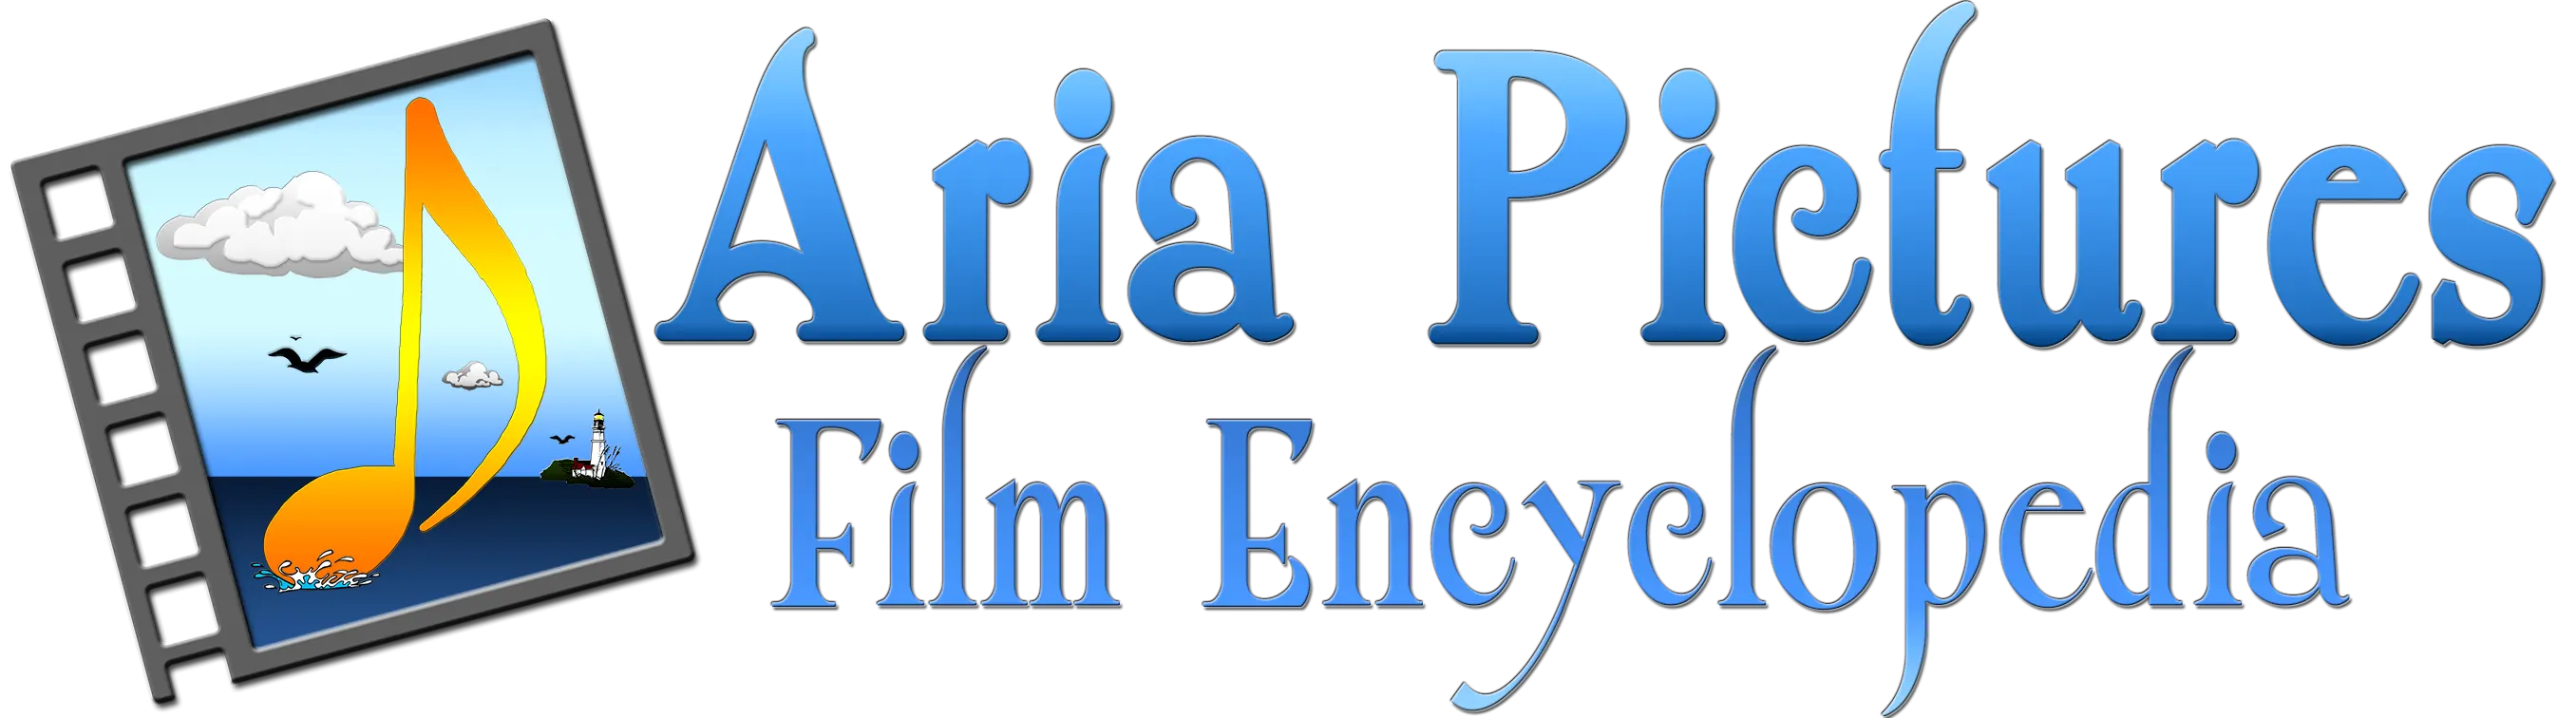 Aria Pictures Films Encyclopedia logo.